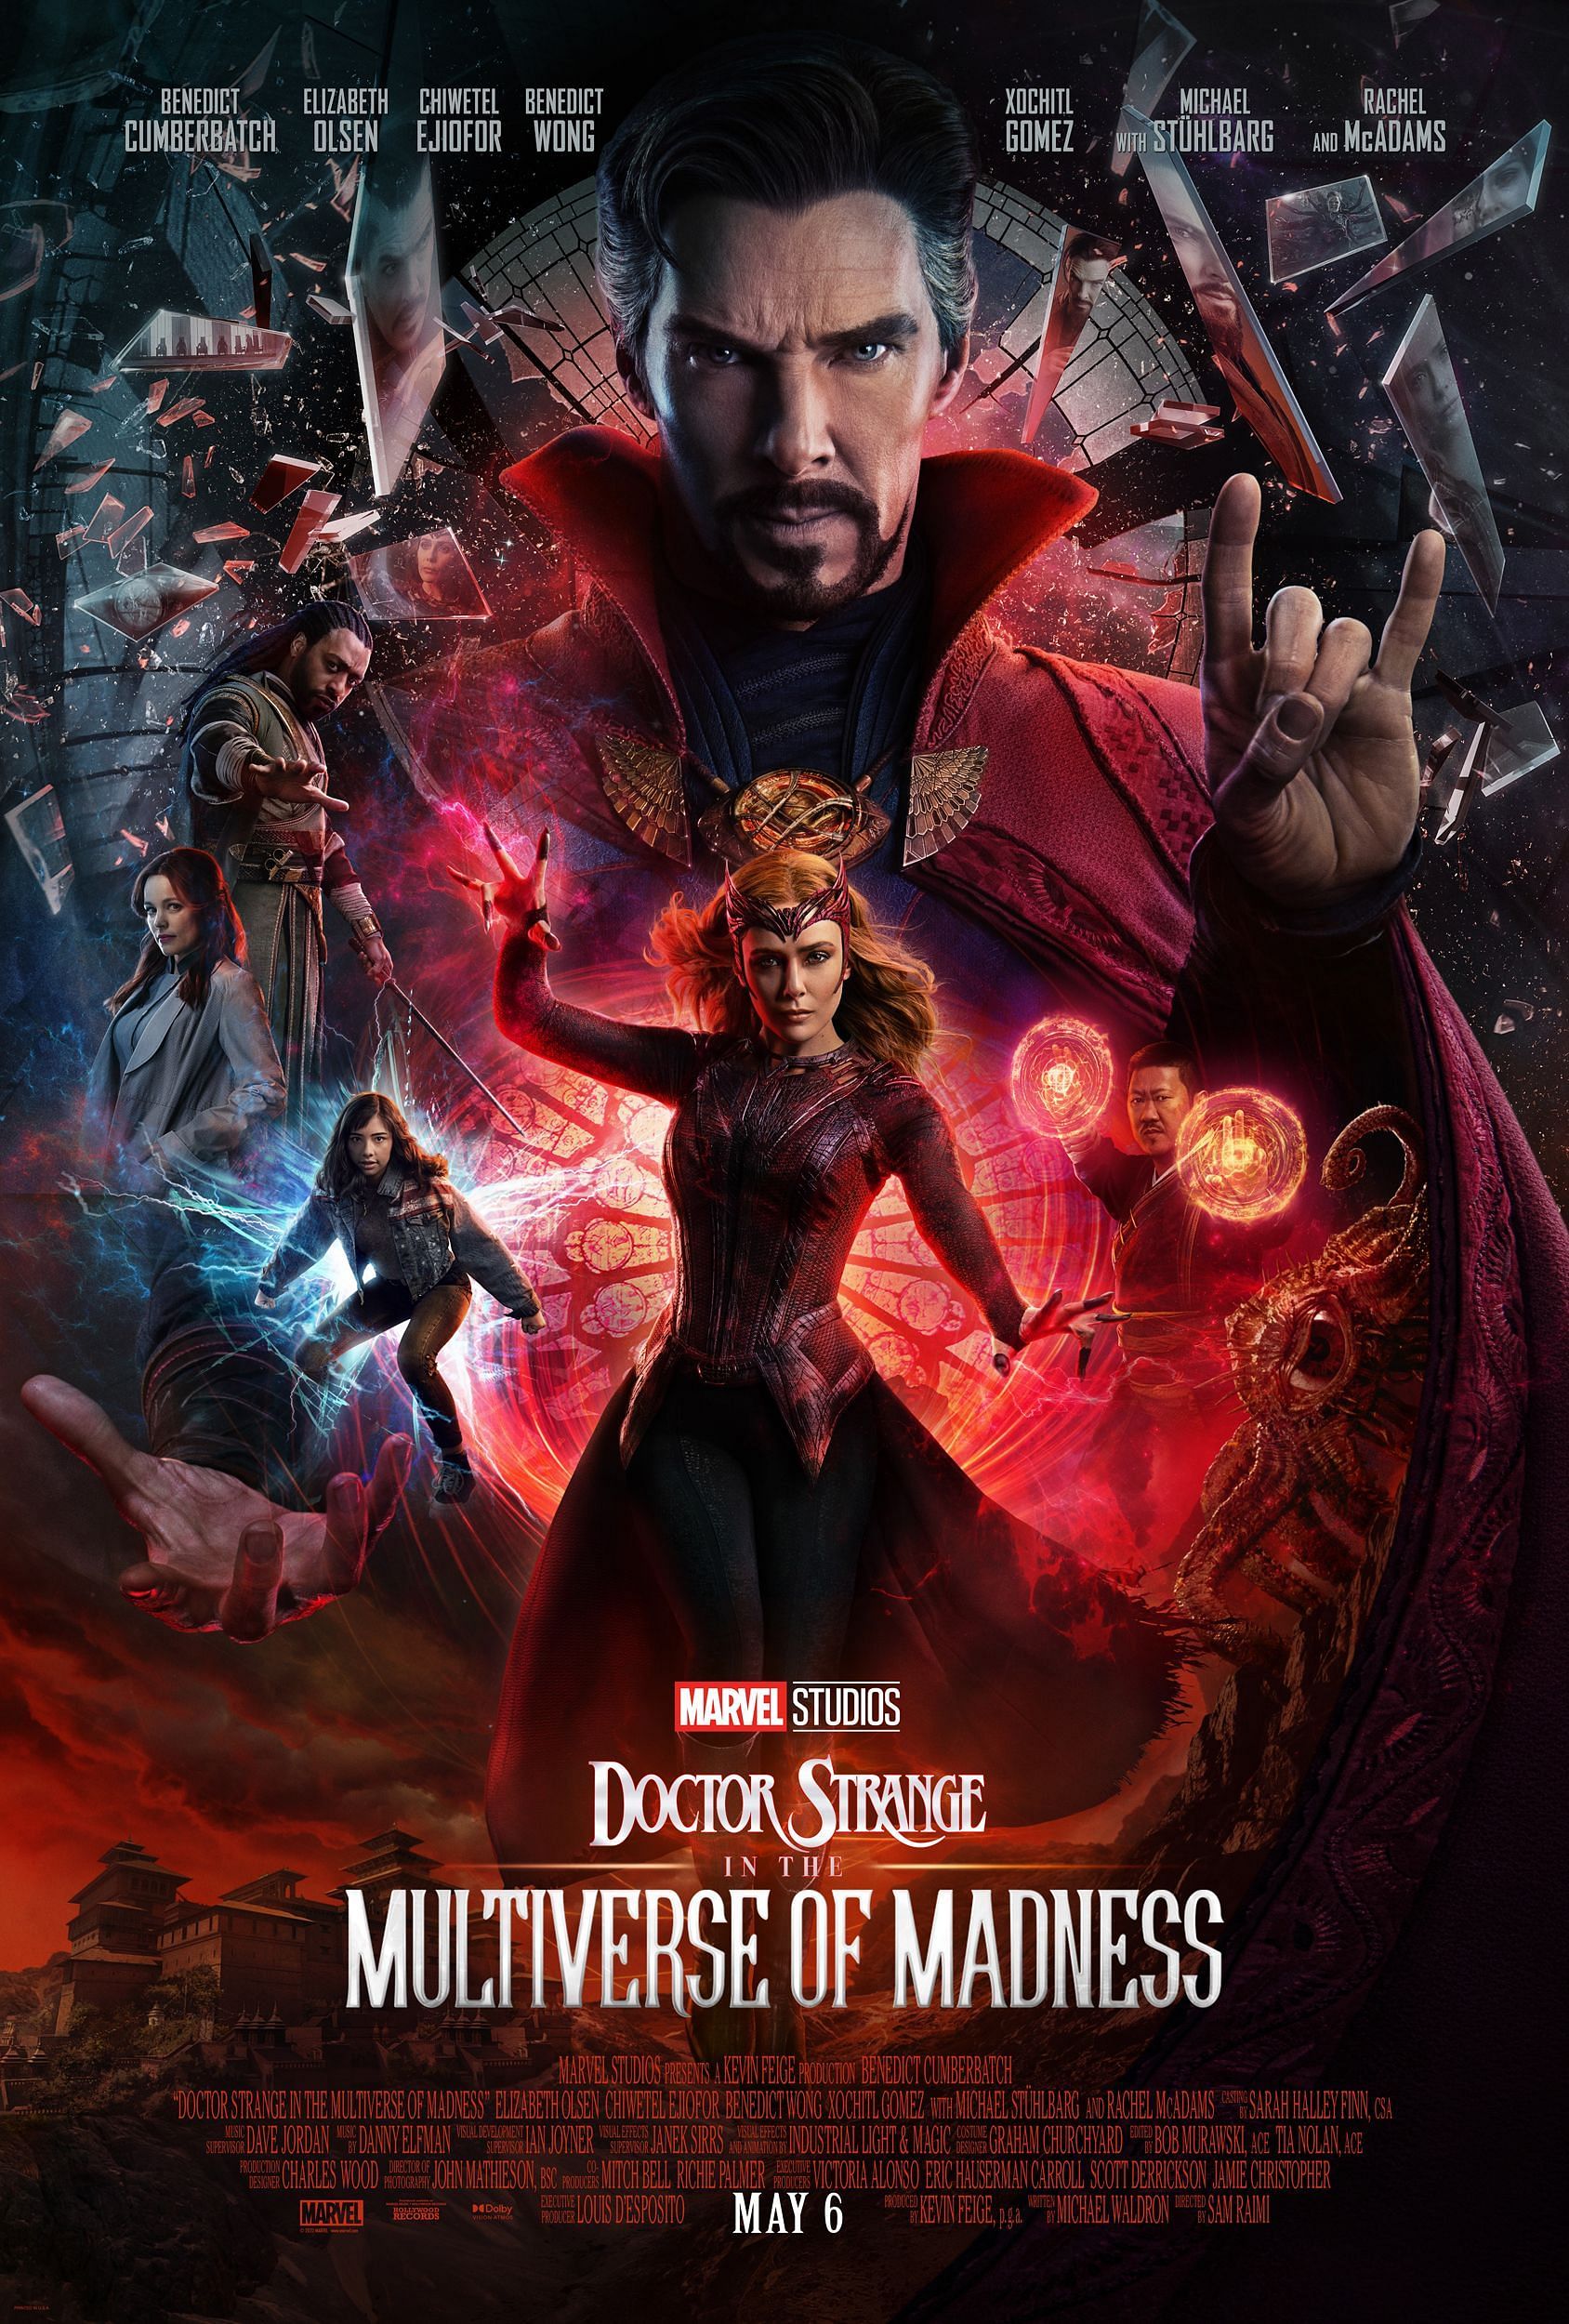 Doctor Strange in the Multiverse of Madness (Image via Marvel)